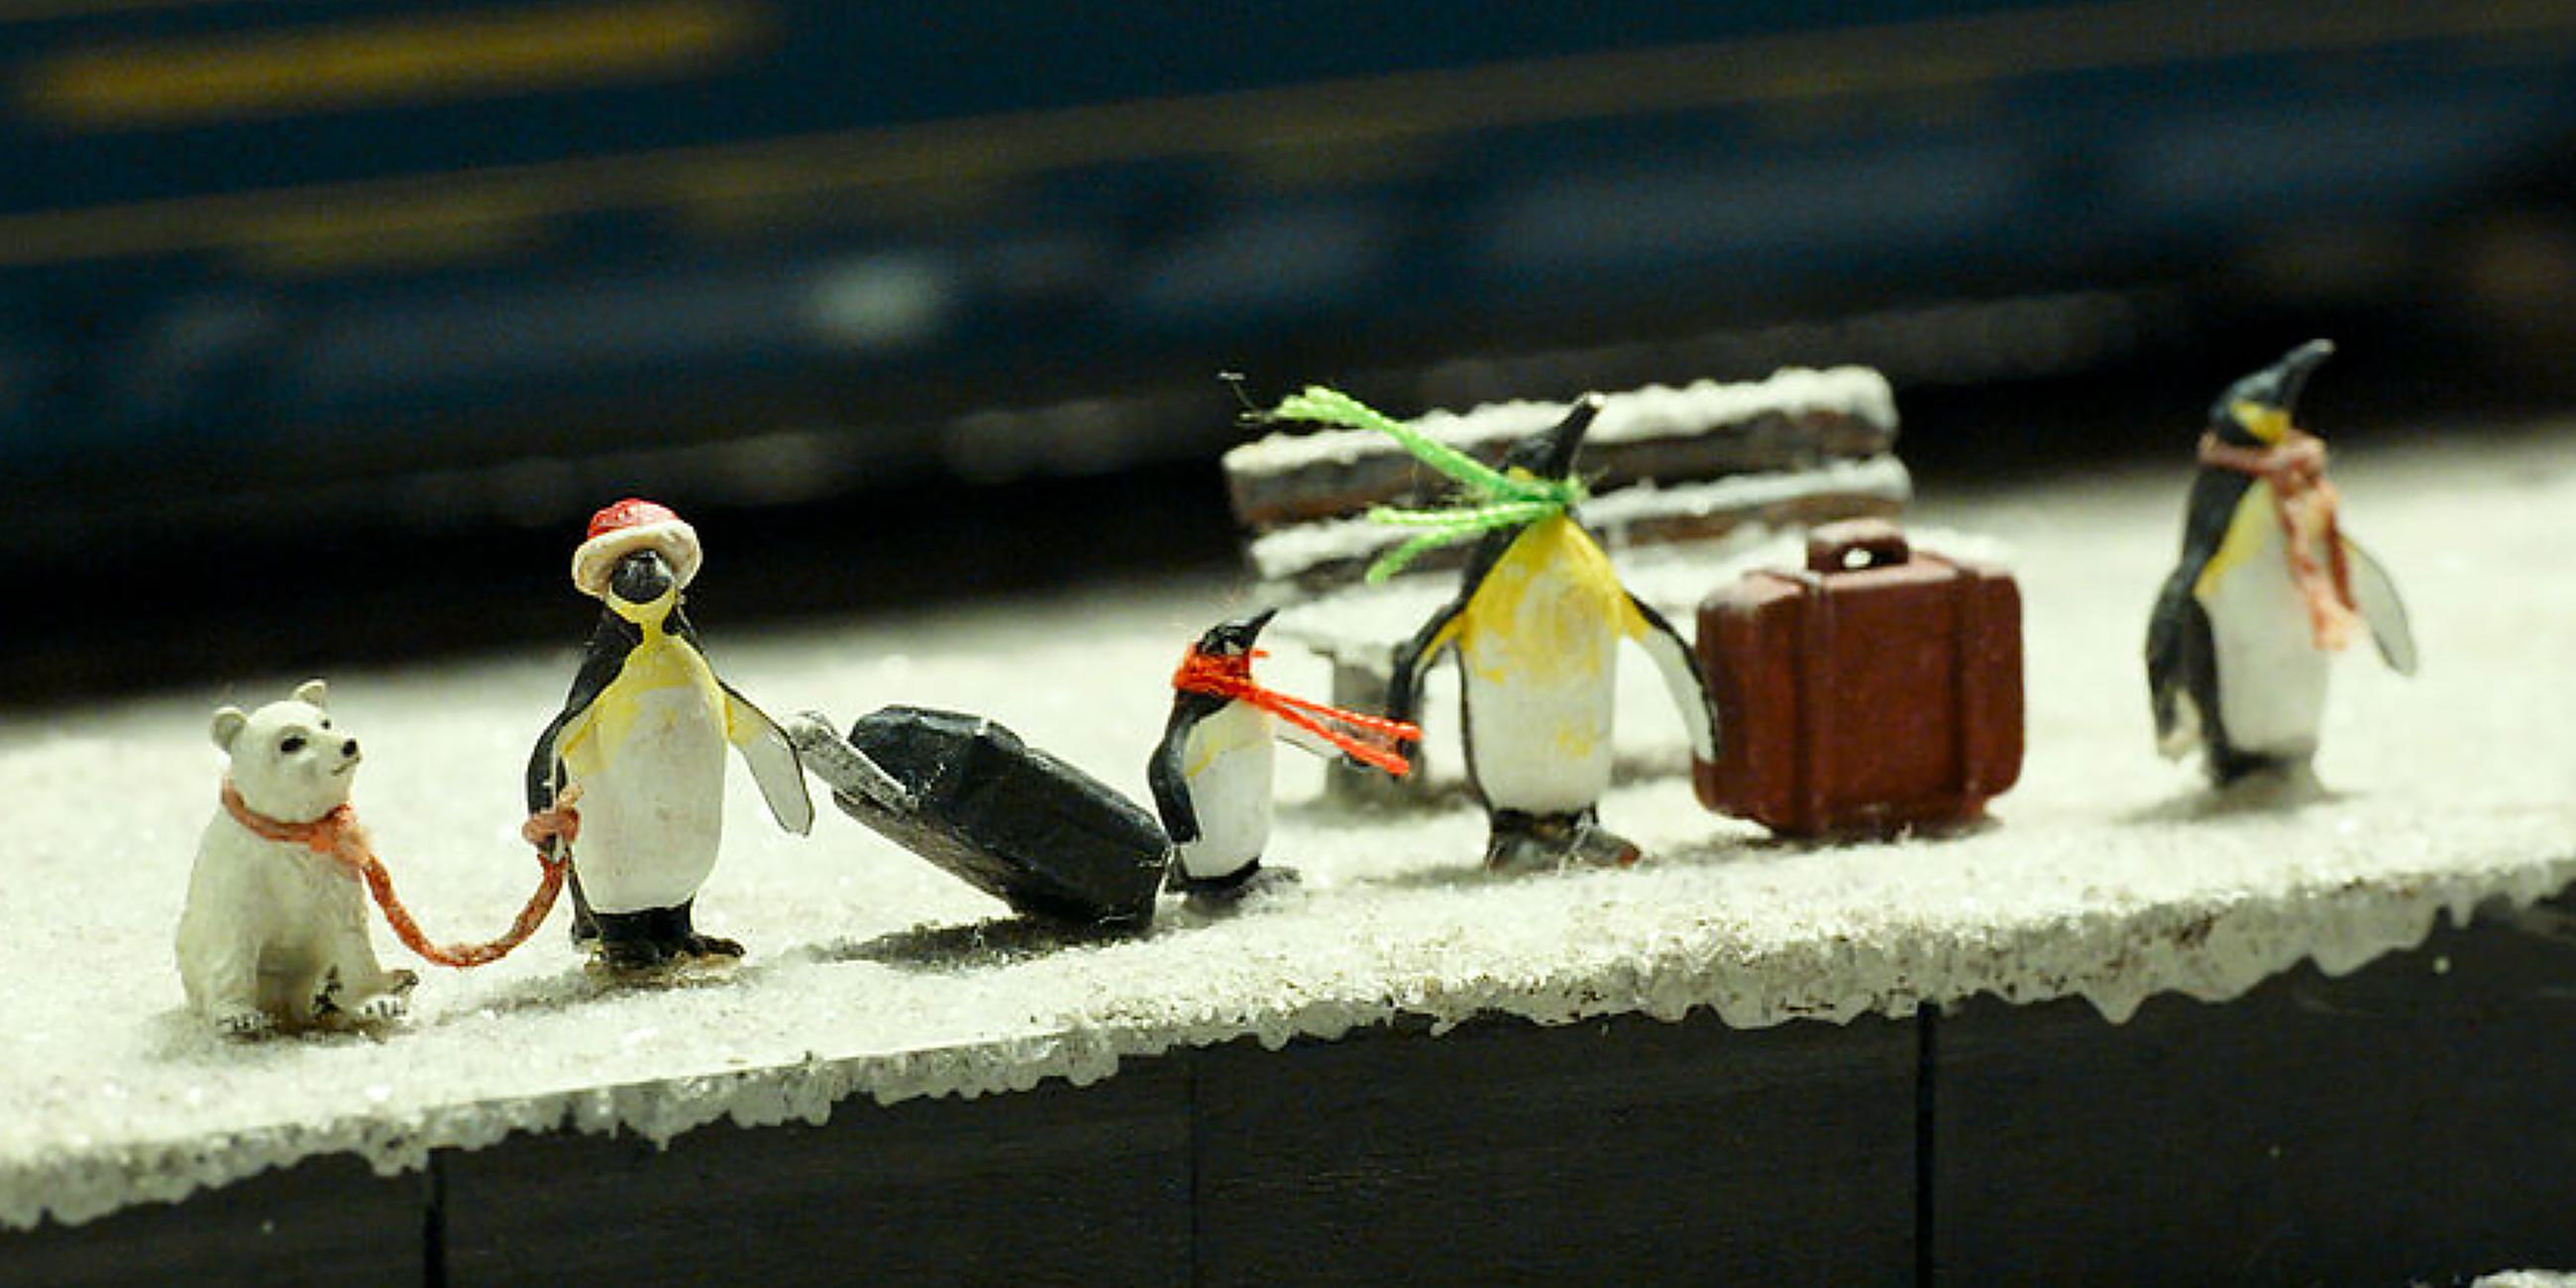 Miniatur Wunderland: Pinguine am Bahnsteig